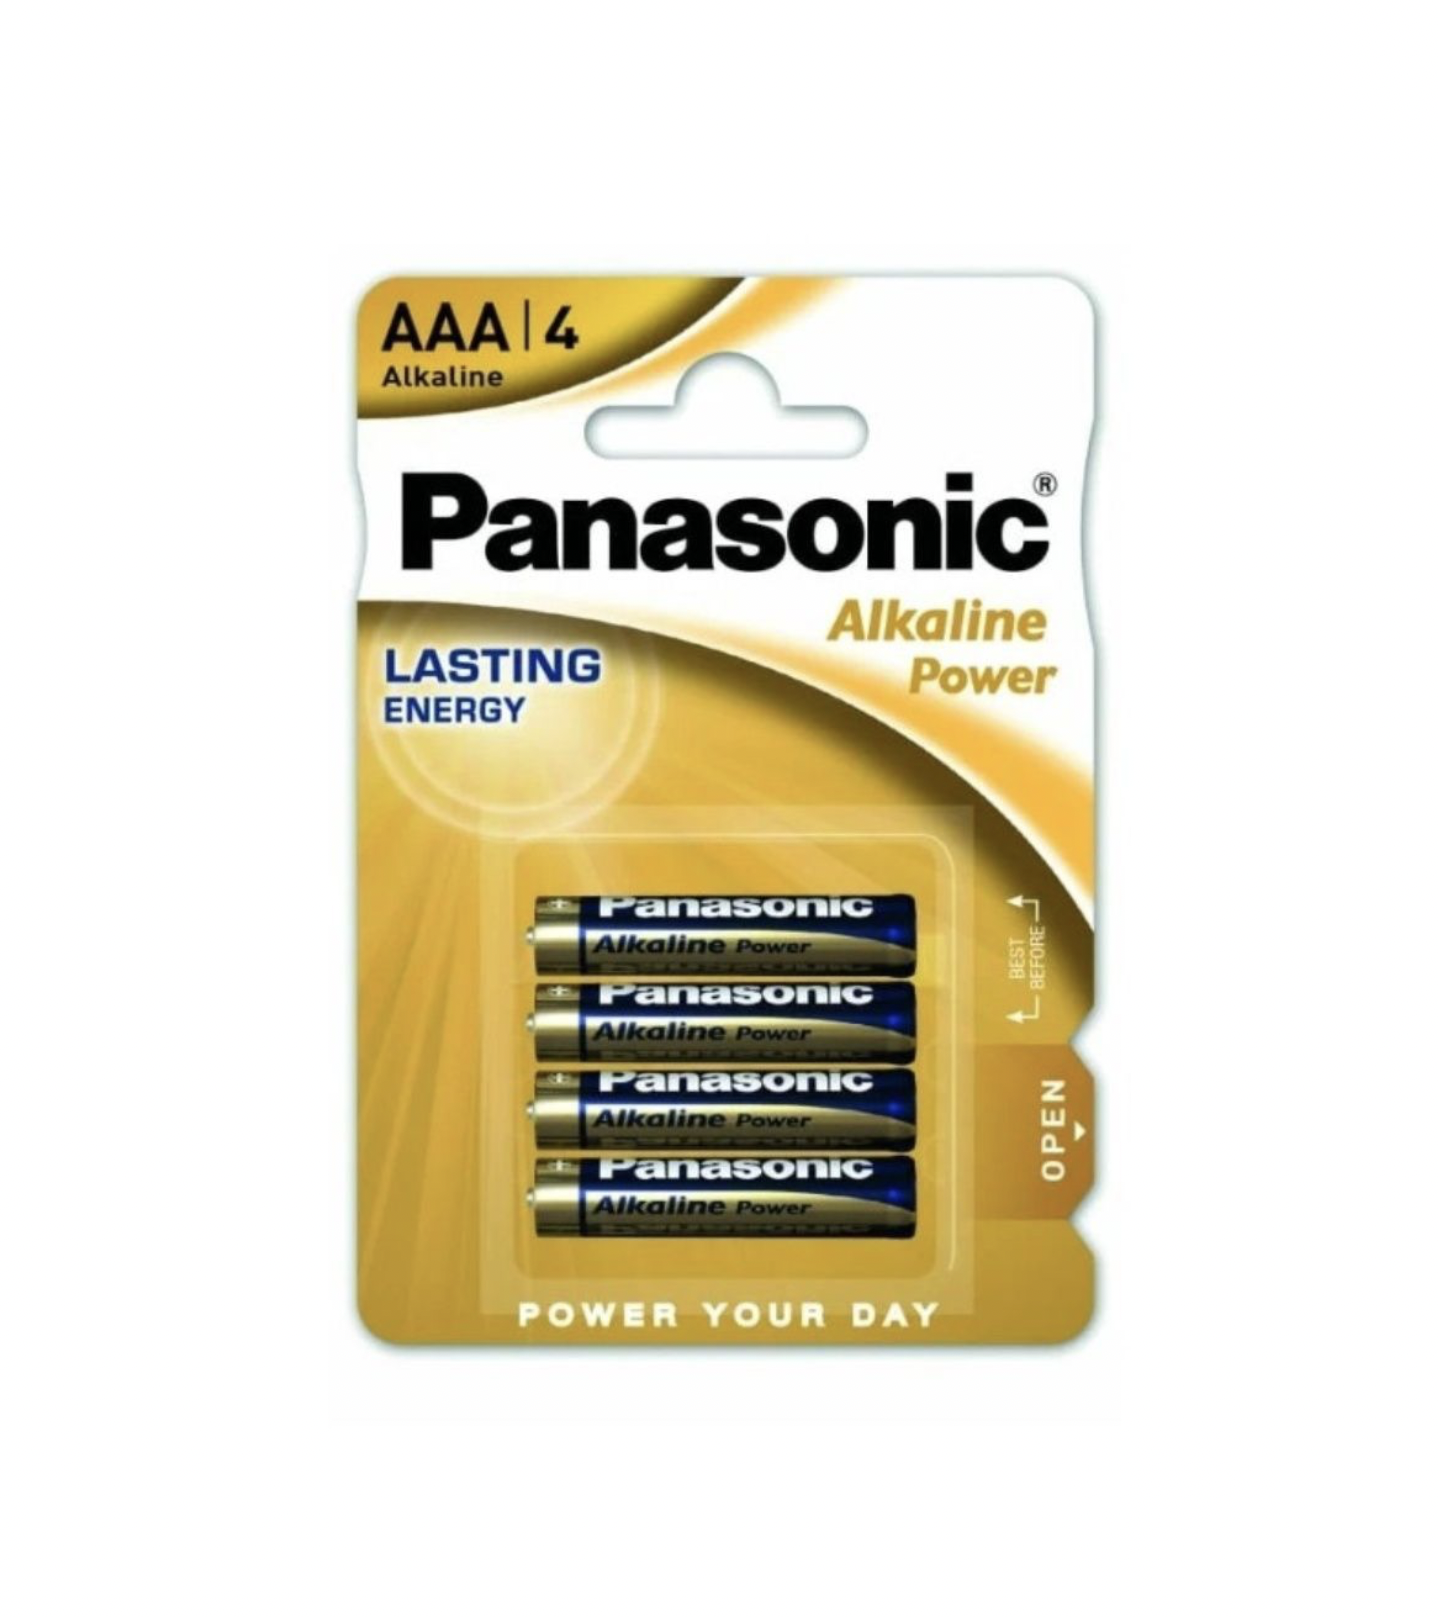   / Panasonic -  Alkaline Power Lasting Energy LR03 AAA 4 